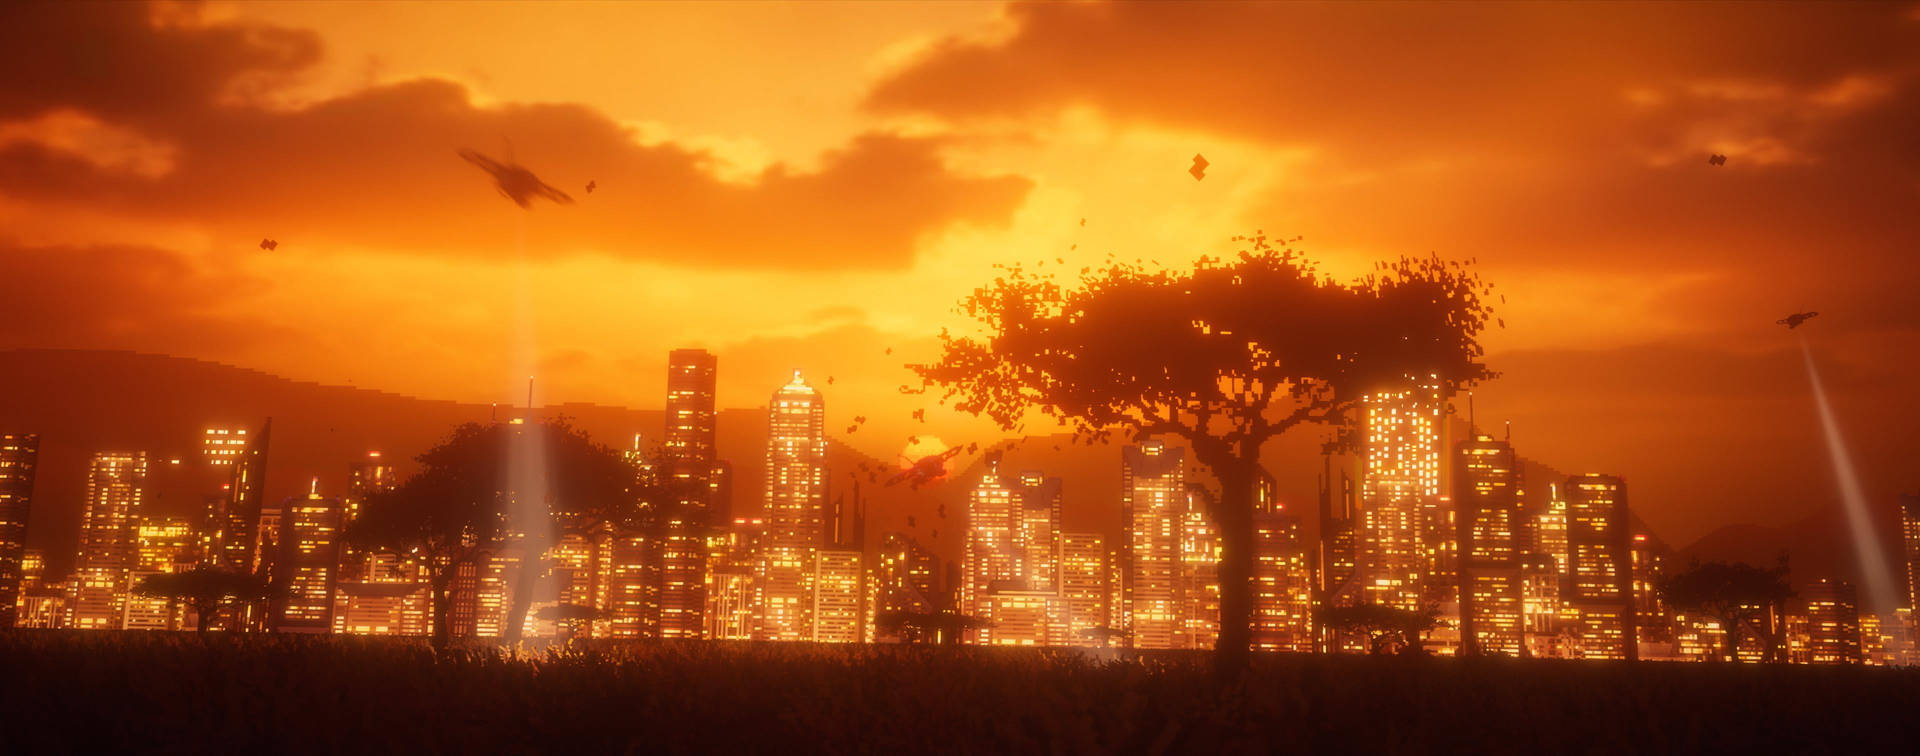 Ultrawide Cyberpunk City On Flame Background